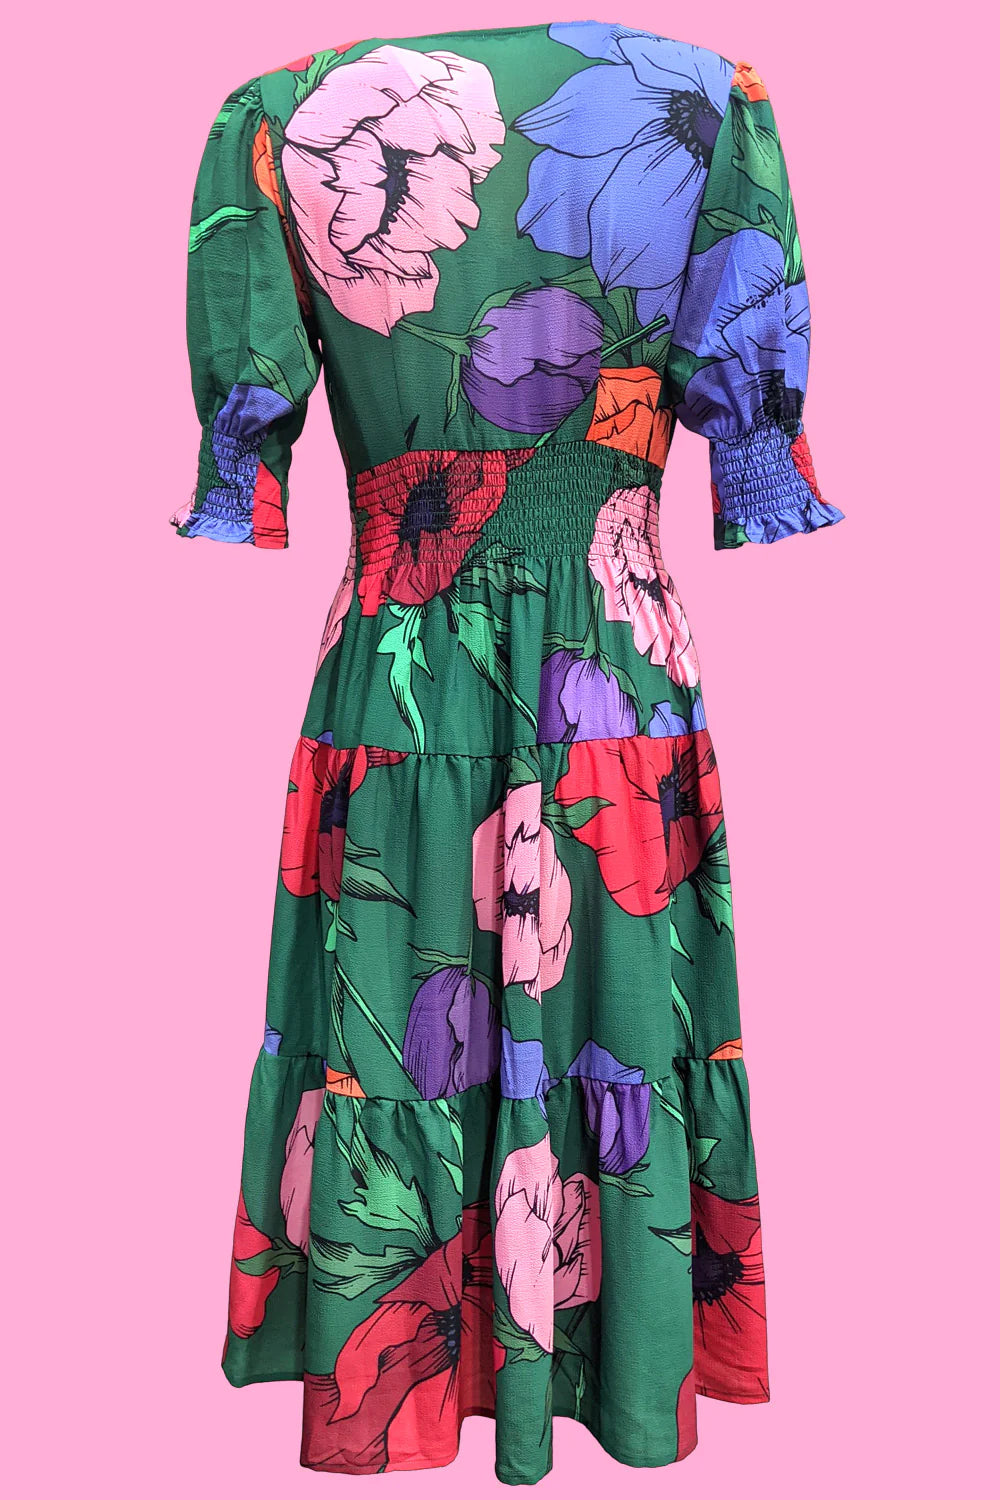 Annah S - Dolly Dress - Green Poppies